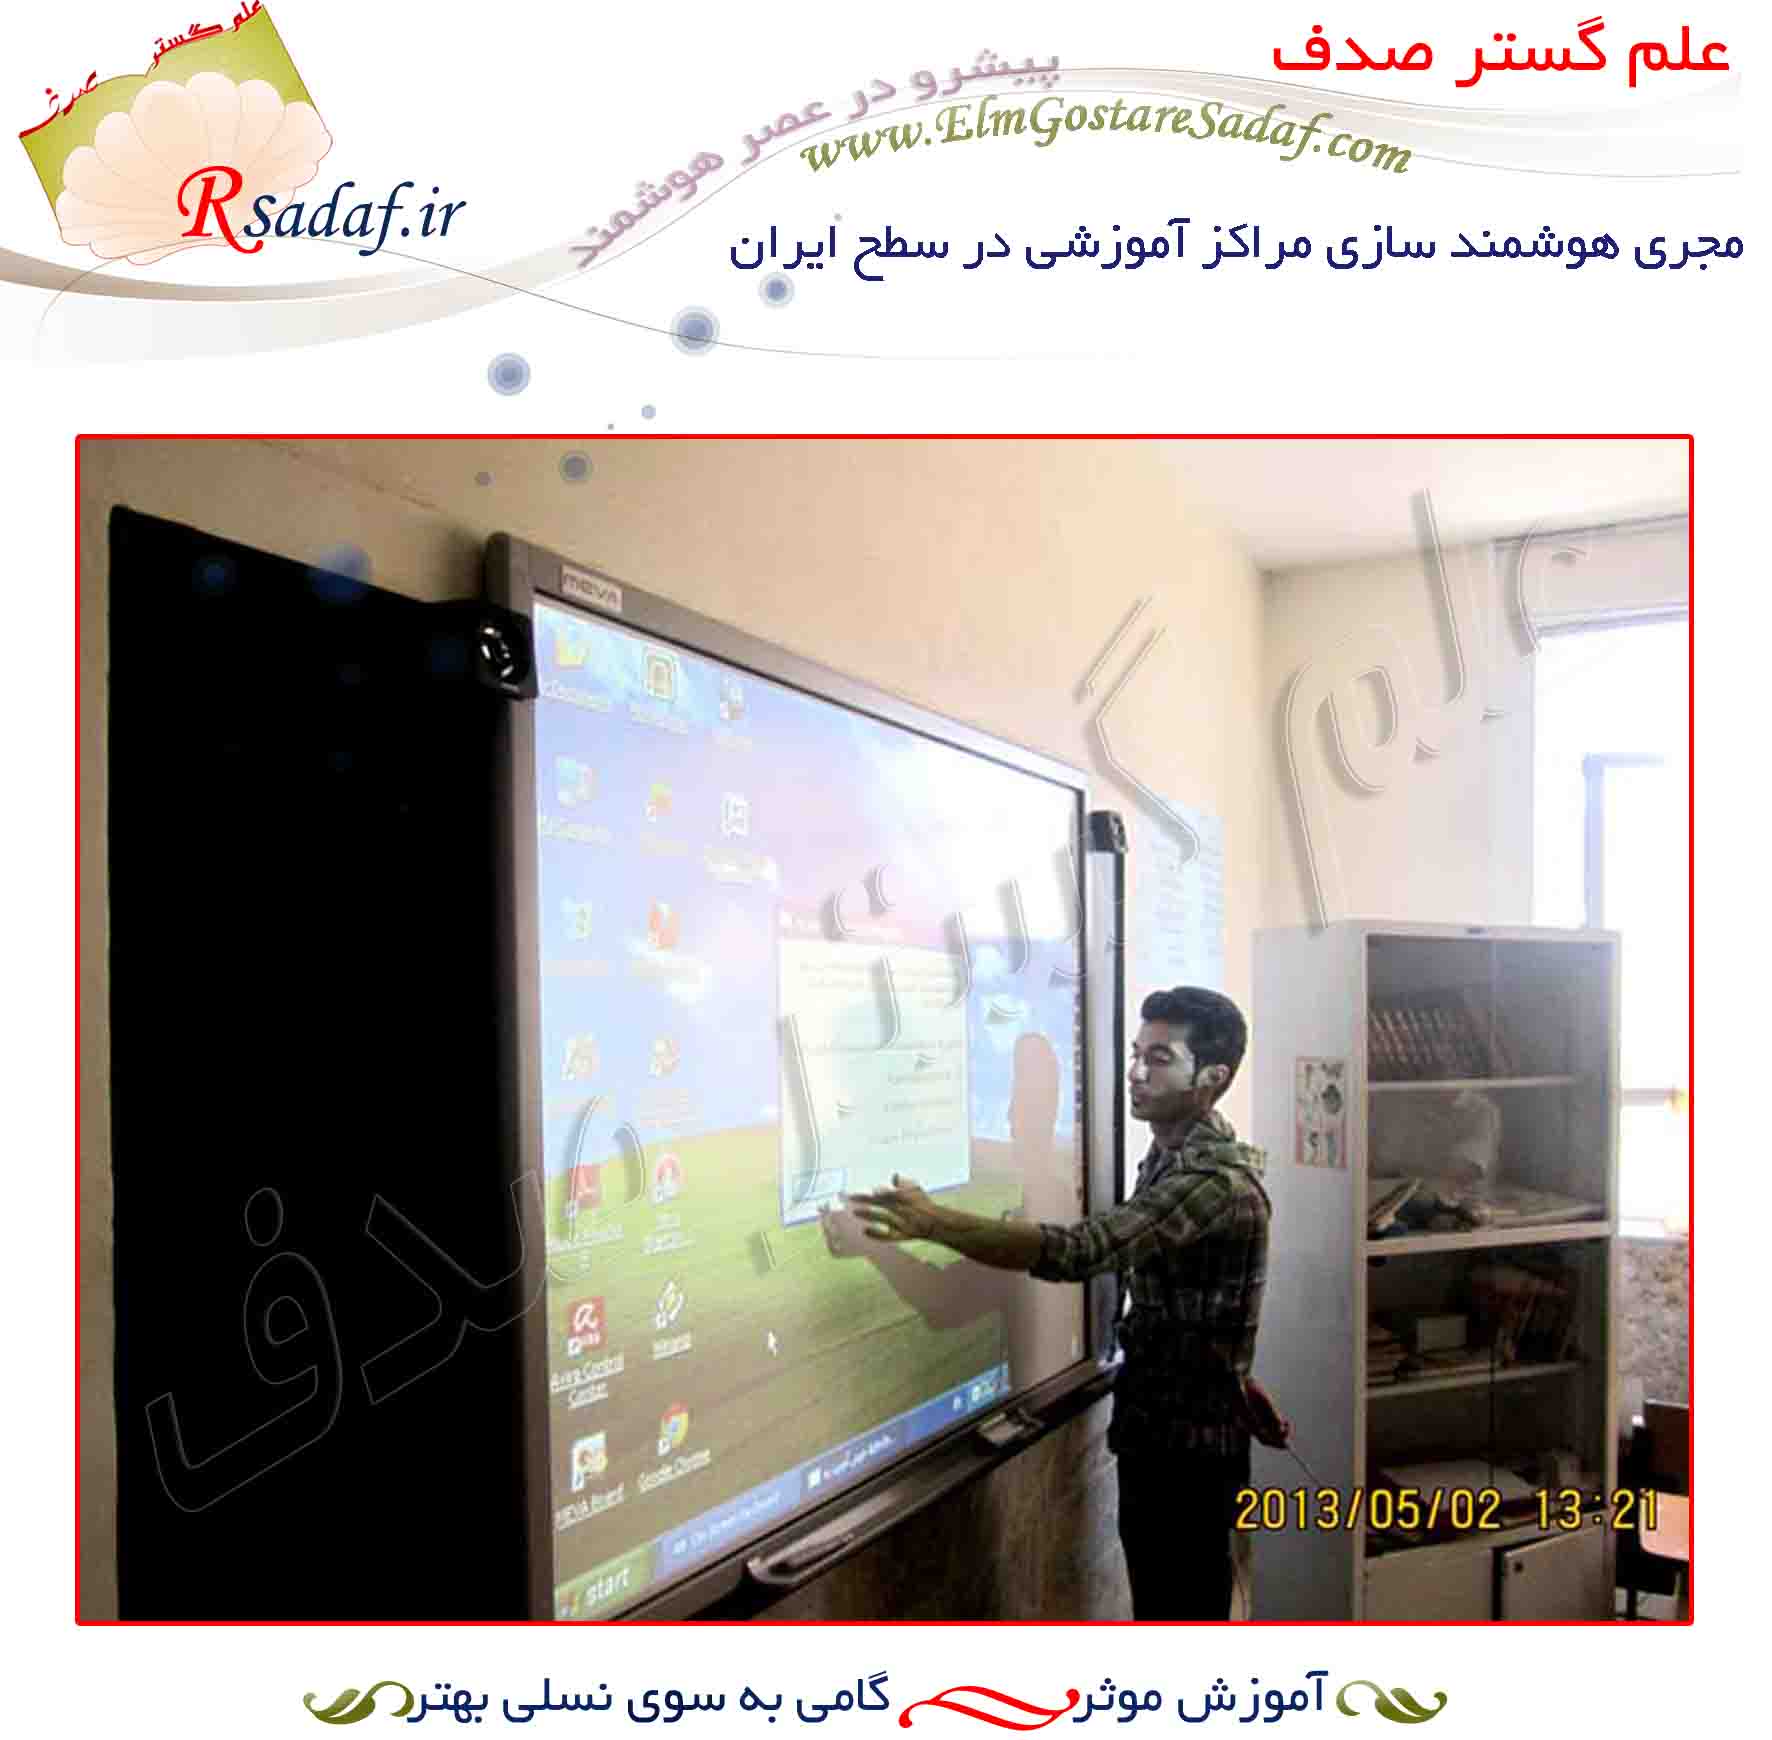 كلاس هوشمند مدرسه دولتي رضوي شهرك زياران (استان قزوين)